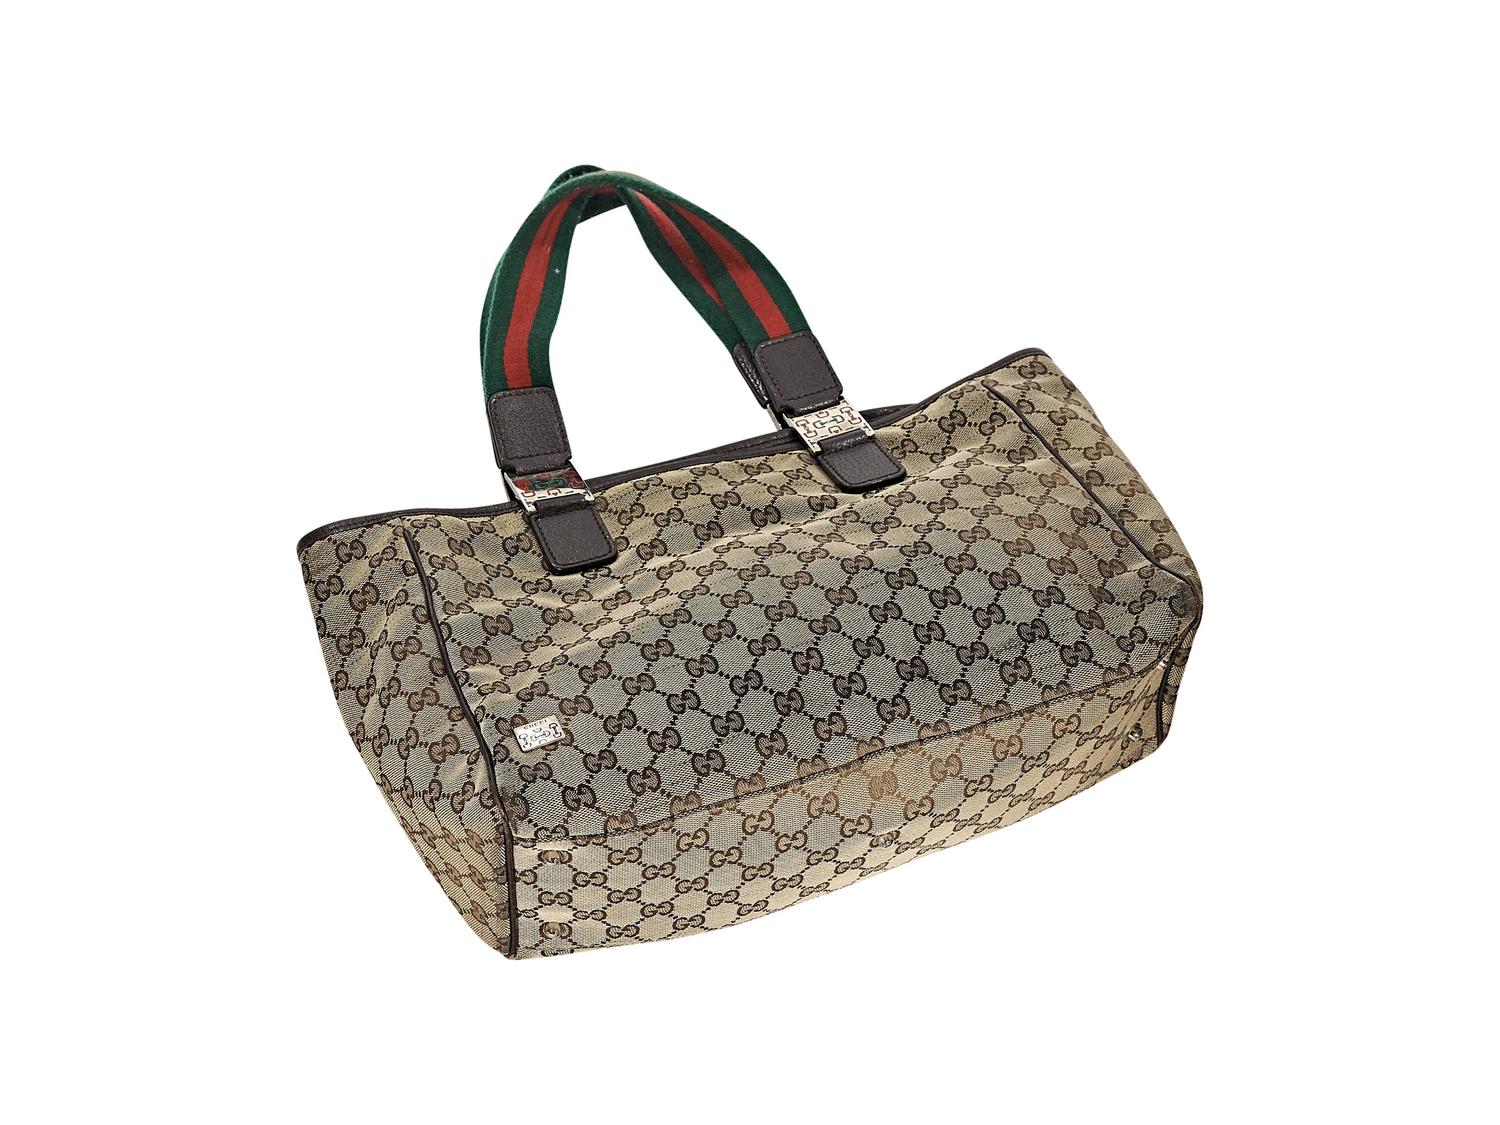 Brown Gucci Monogram Tote Bag For Sale at 1stdibs